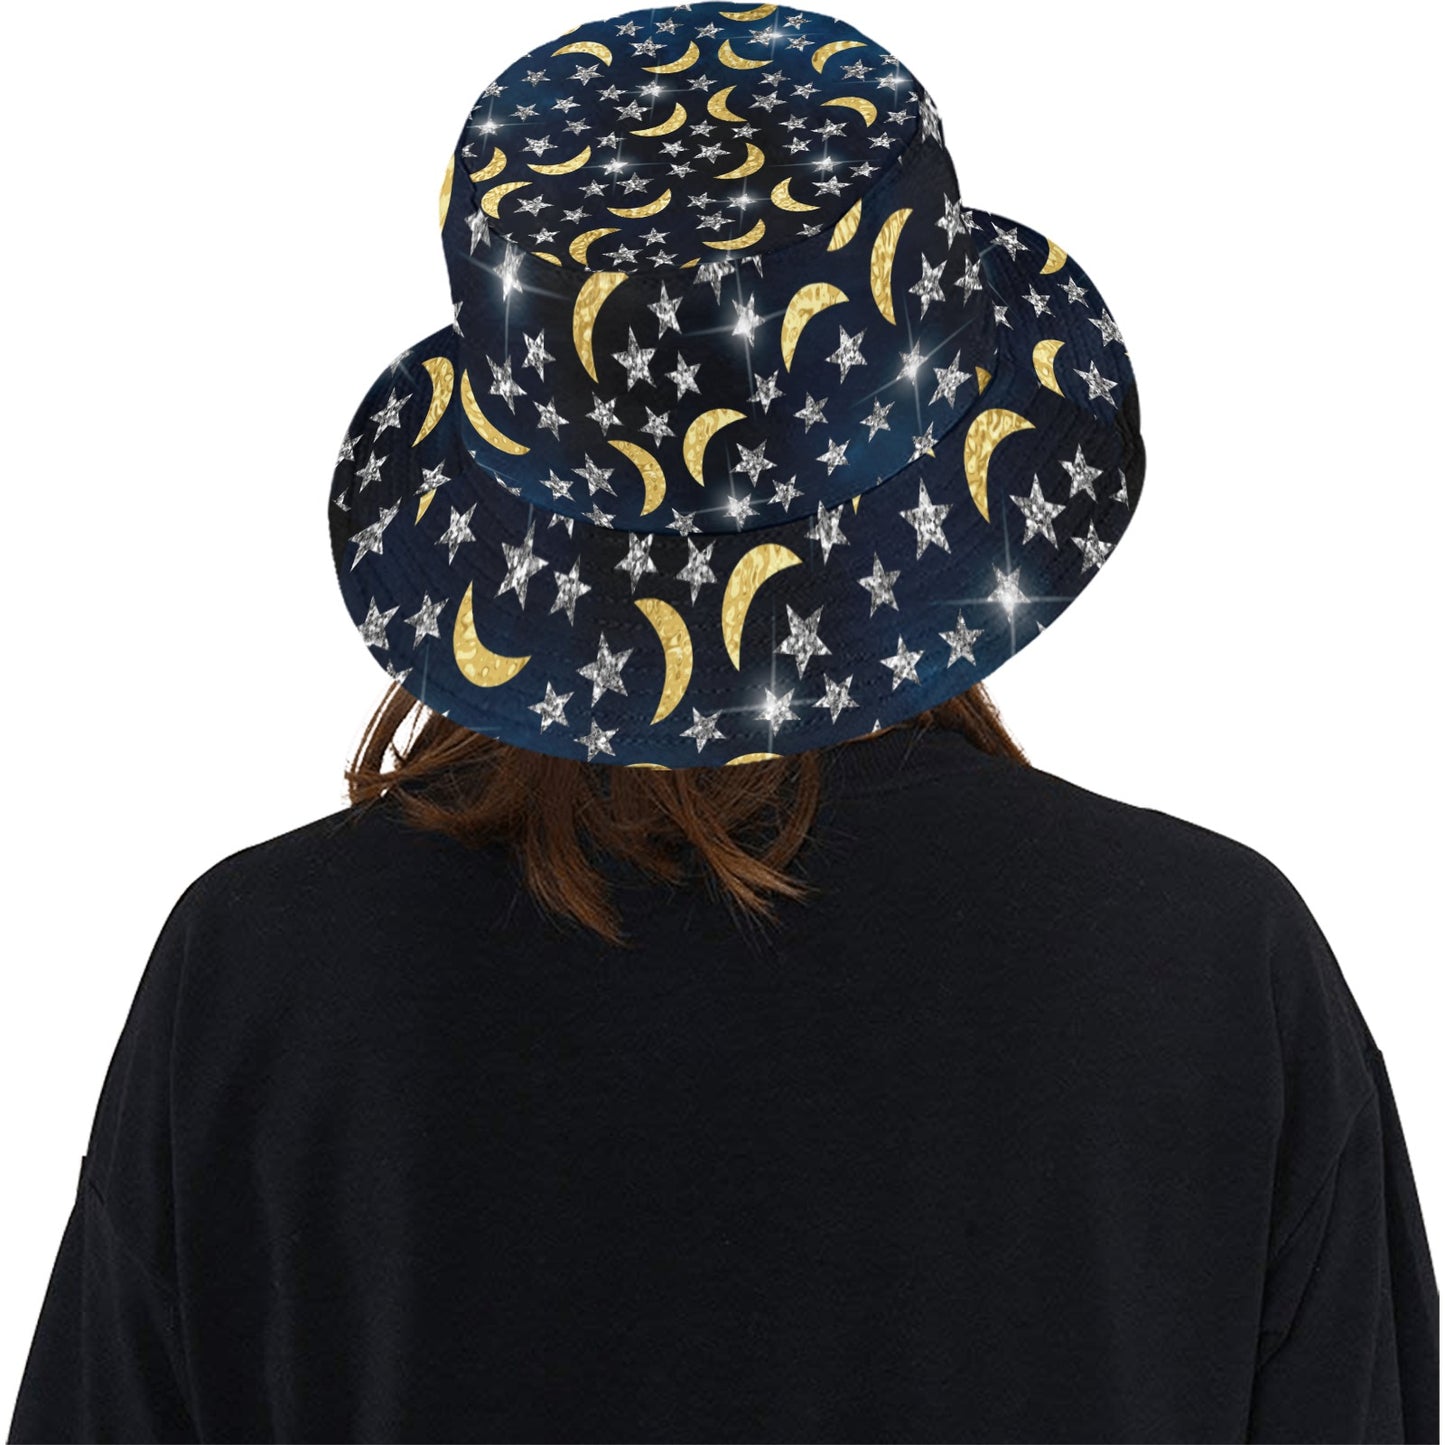 Moon and Stars Summer Bucket Hat